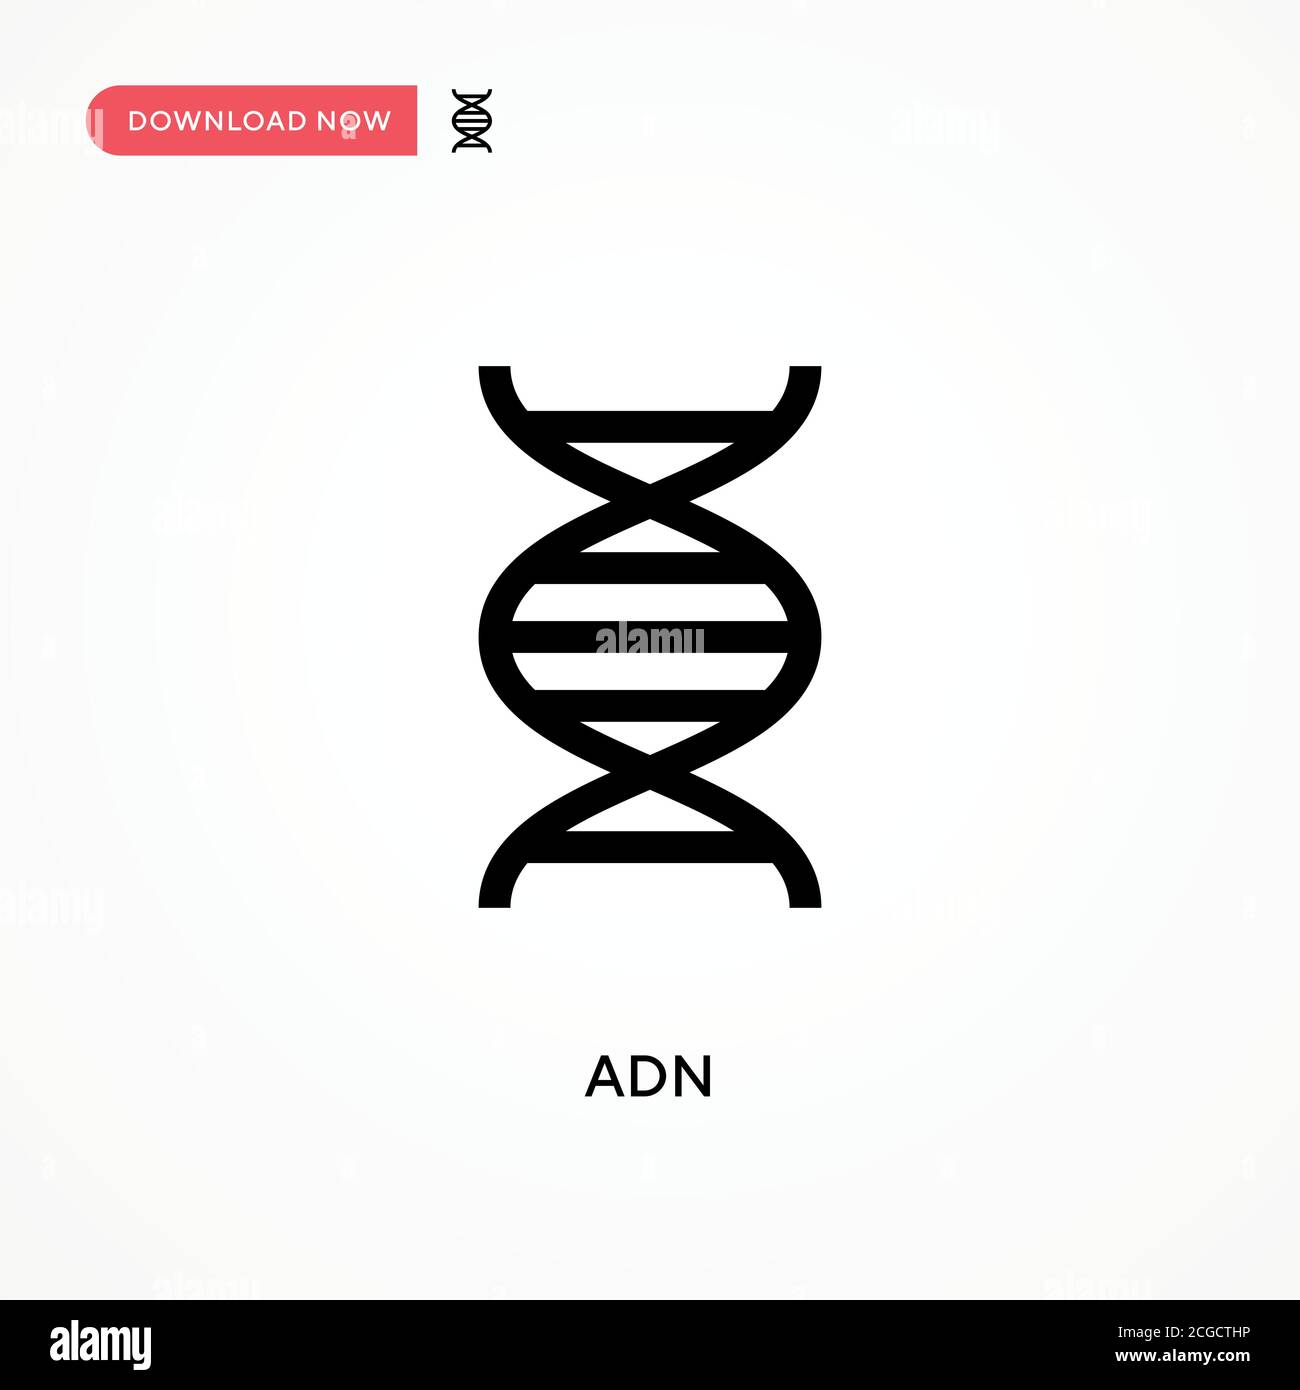 ADN genetischen code Stock-Vektorgrafik - Alamy